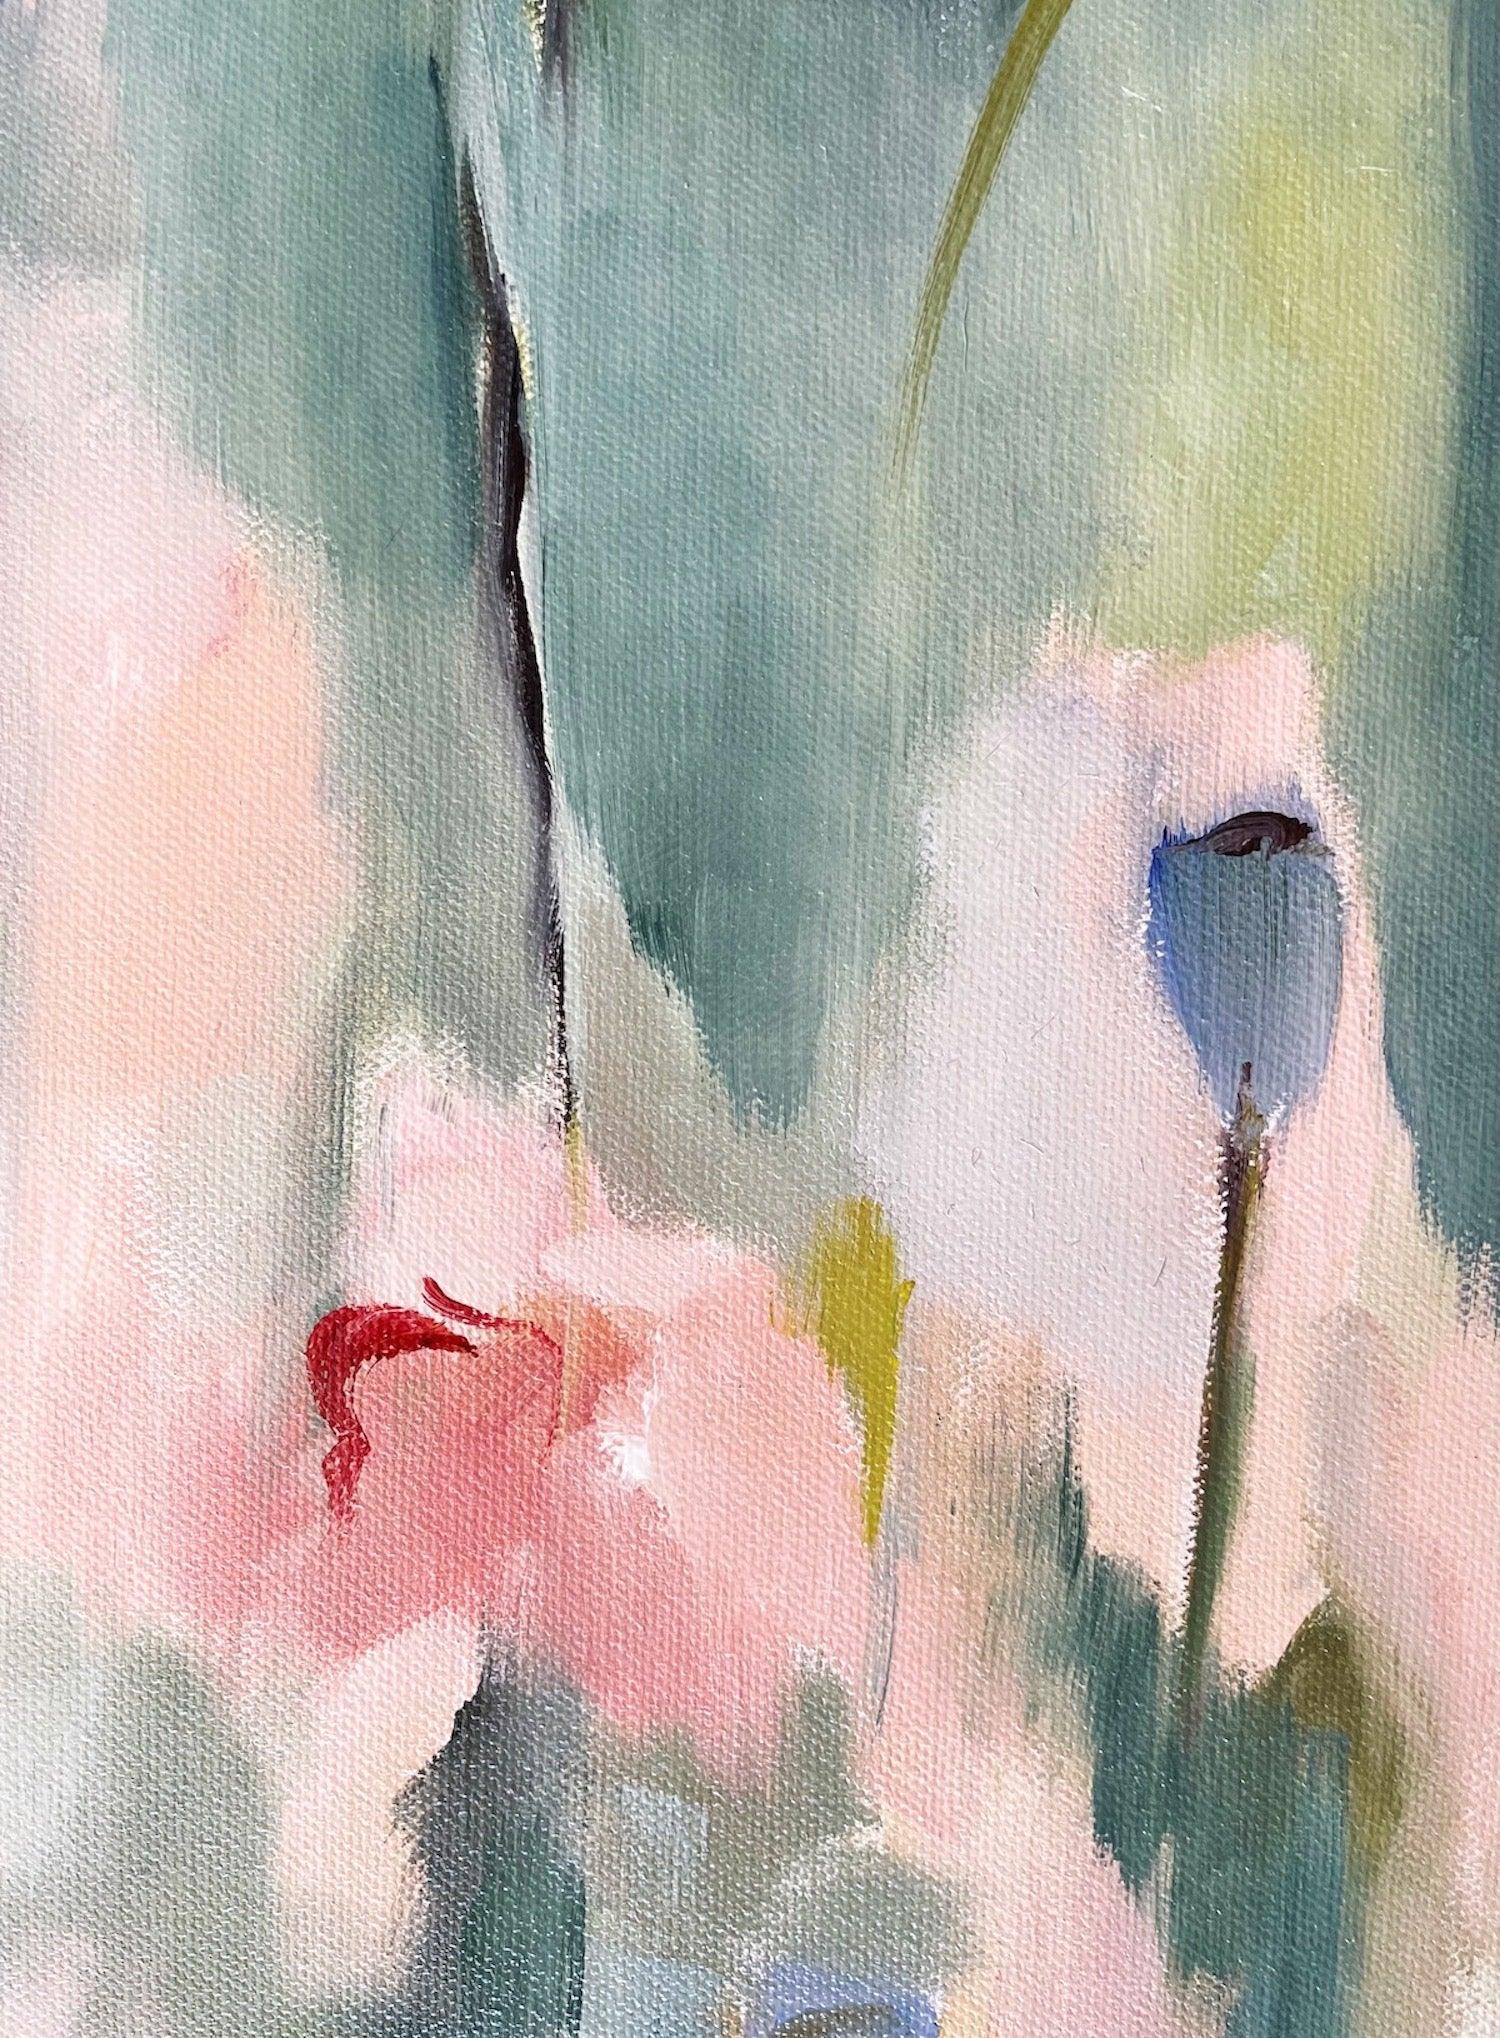 "Enchanted April" Canvas Print - Mary James Ketch Studio